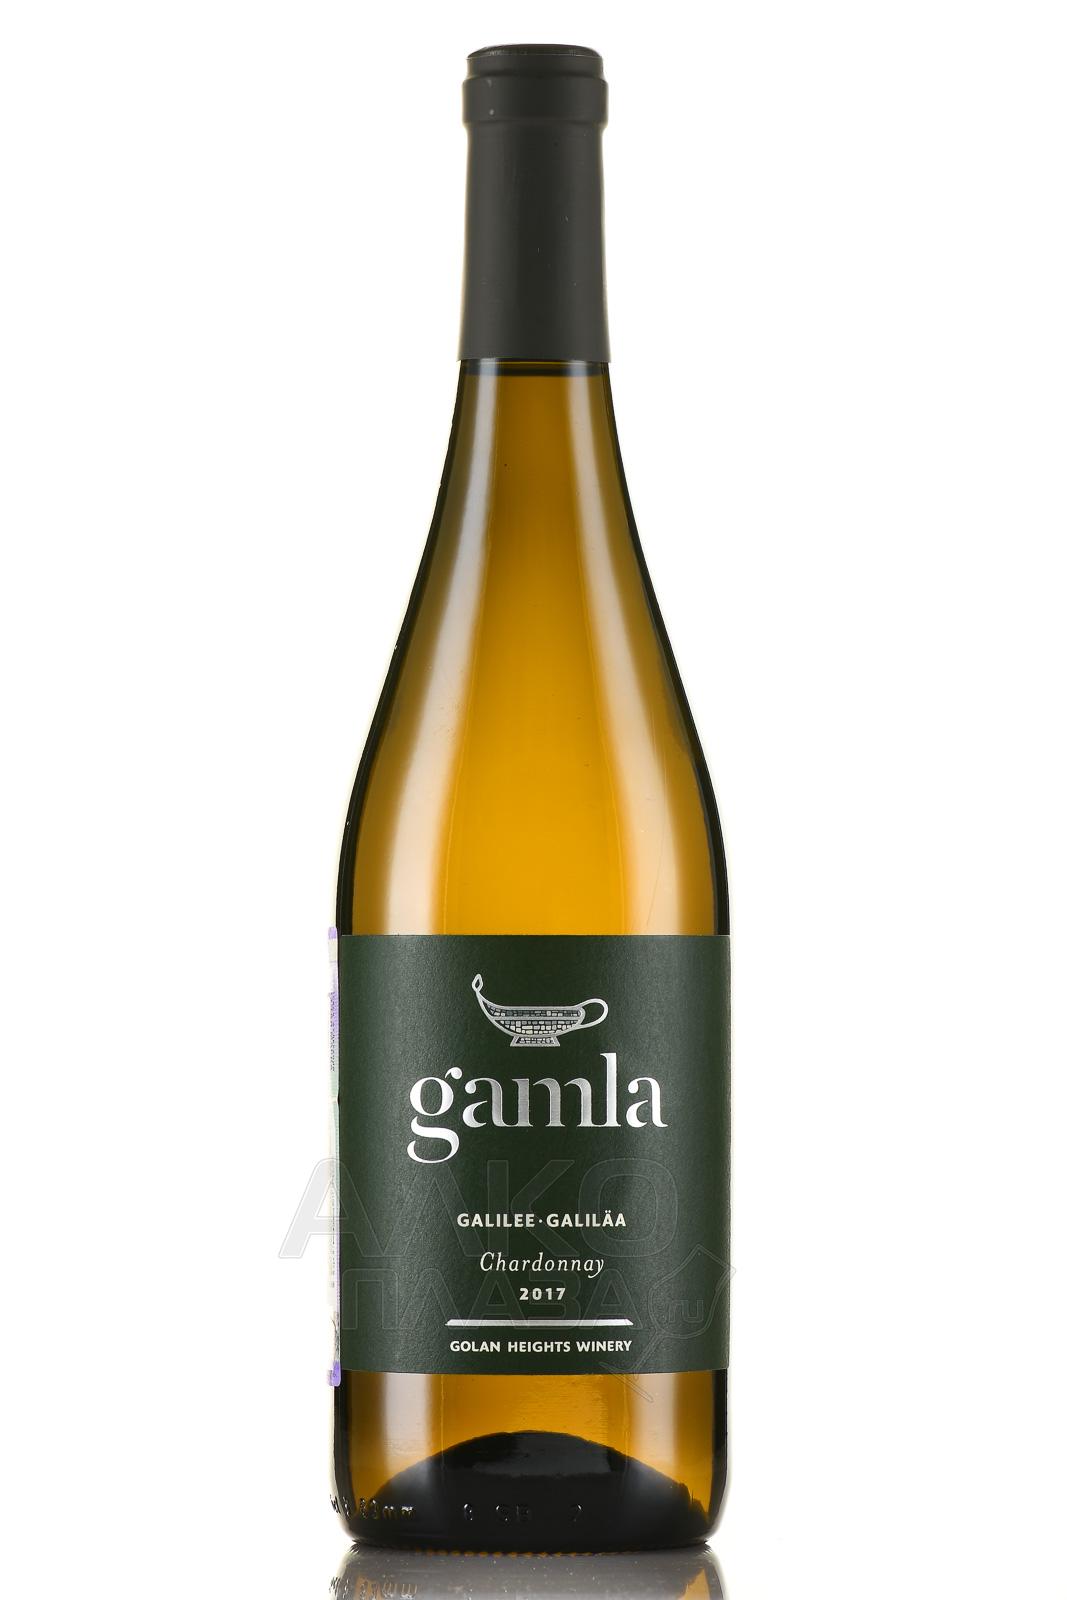 Gamla Chardonnay - вино Гамла Шардонне 0.75 л белое сухое